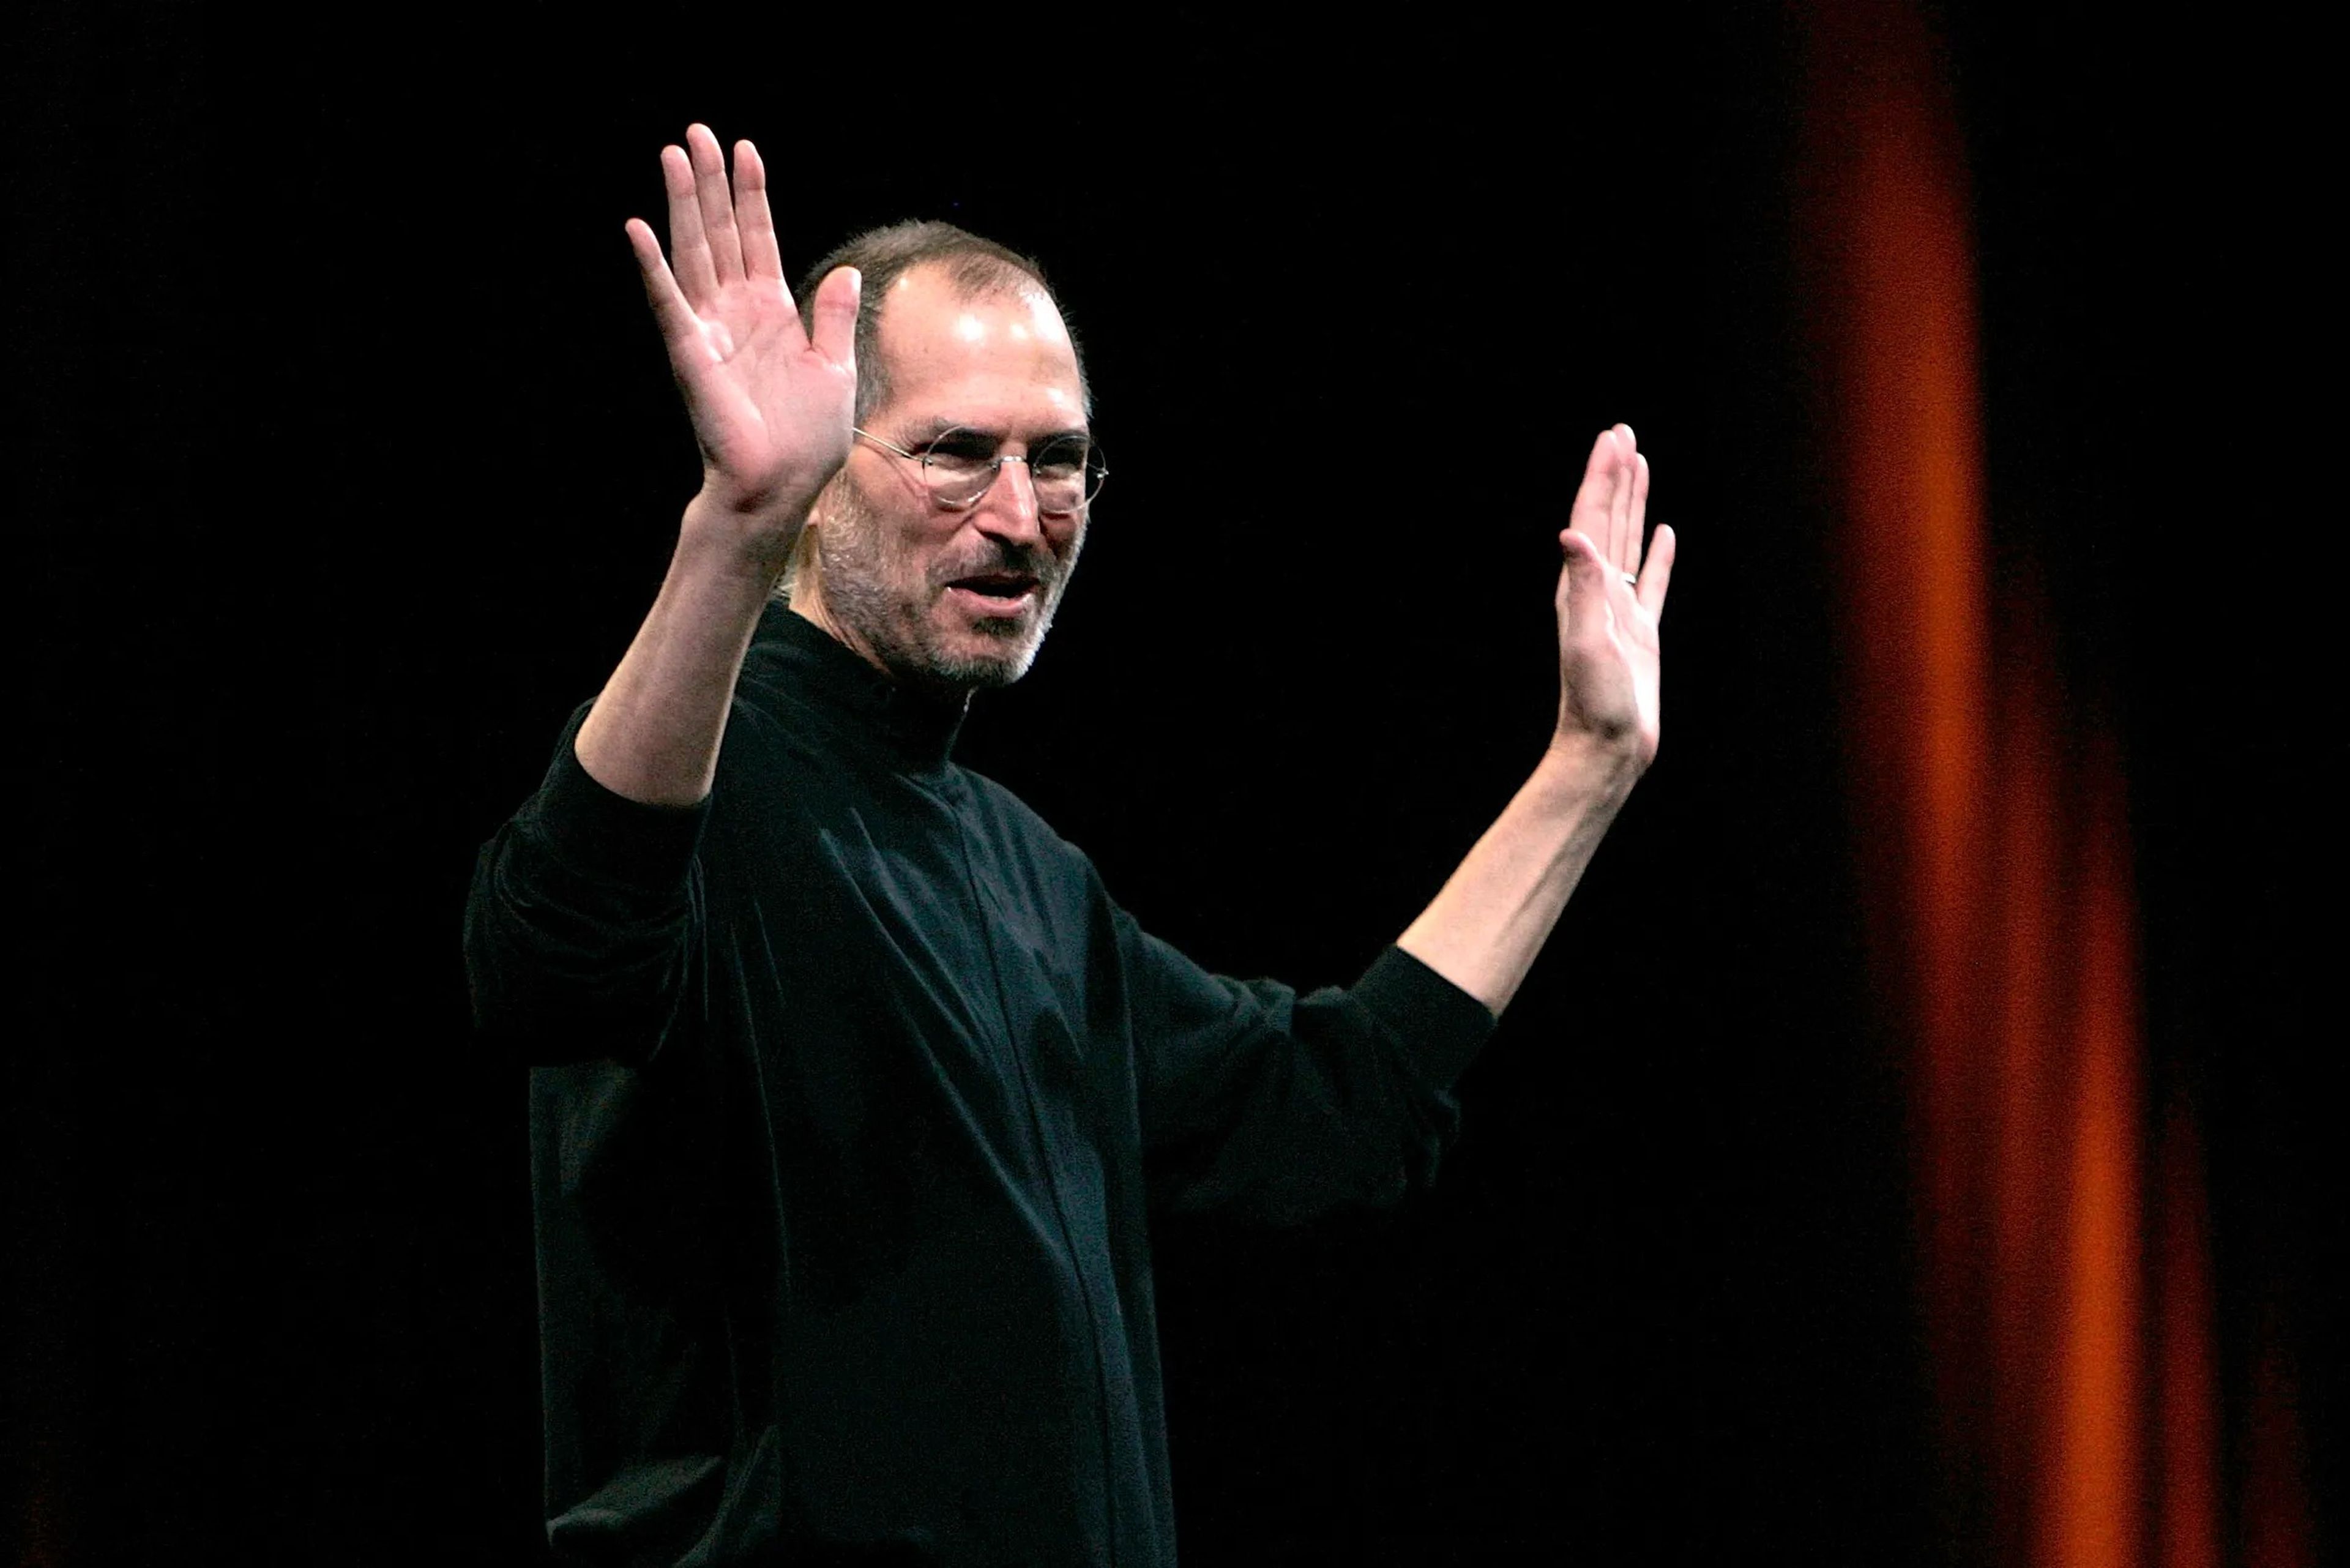 Steve Jobs at a keynote speech in 2008.